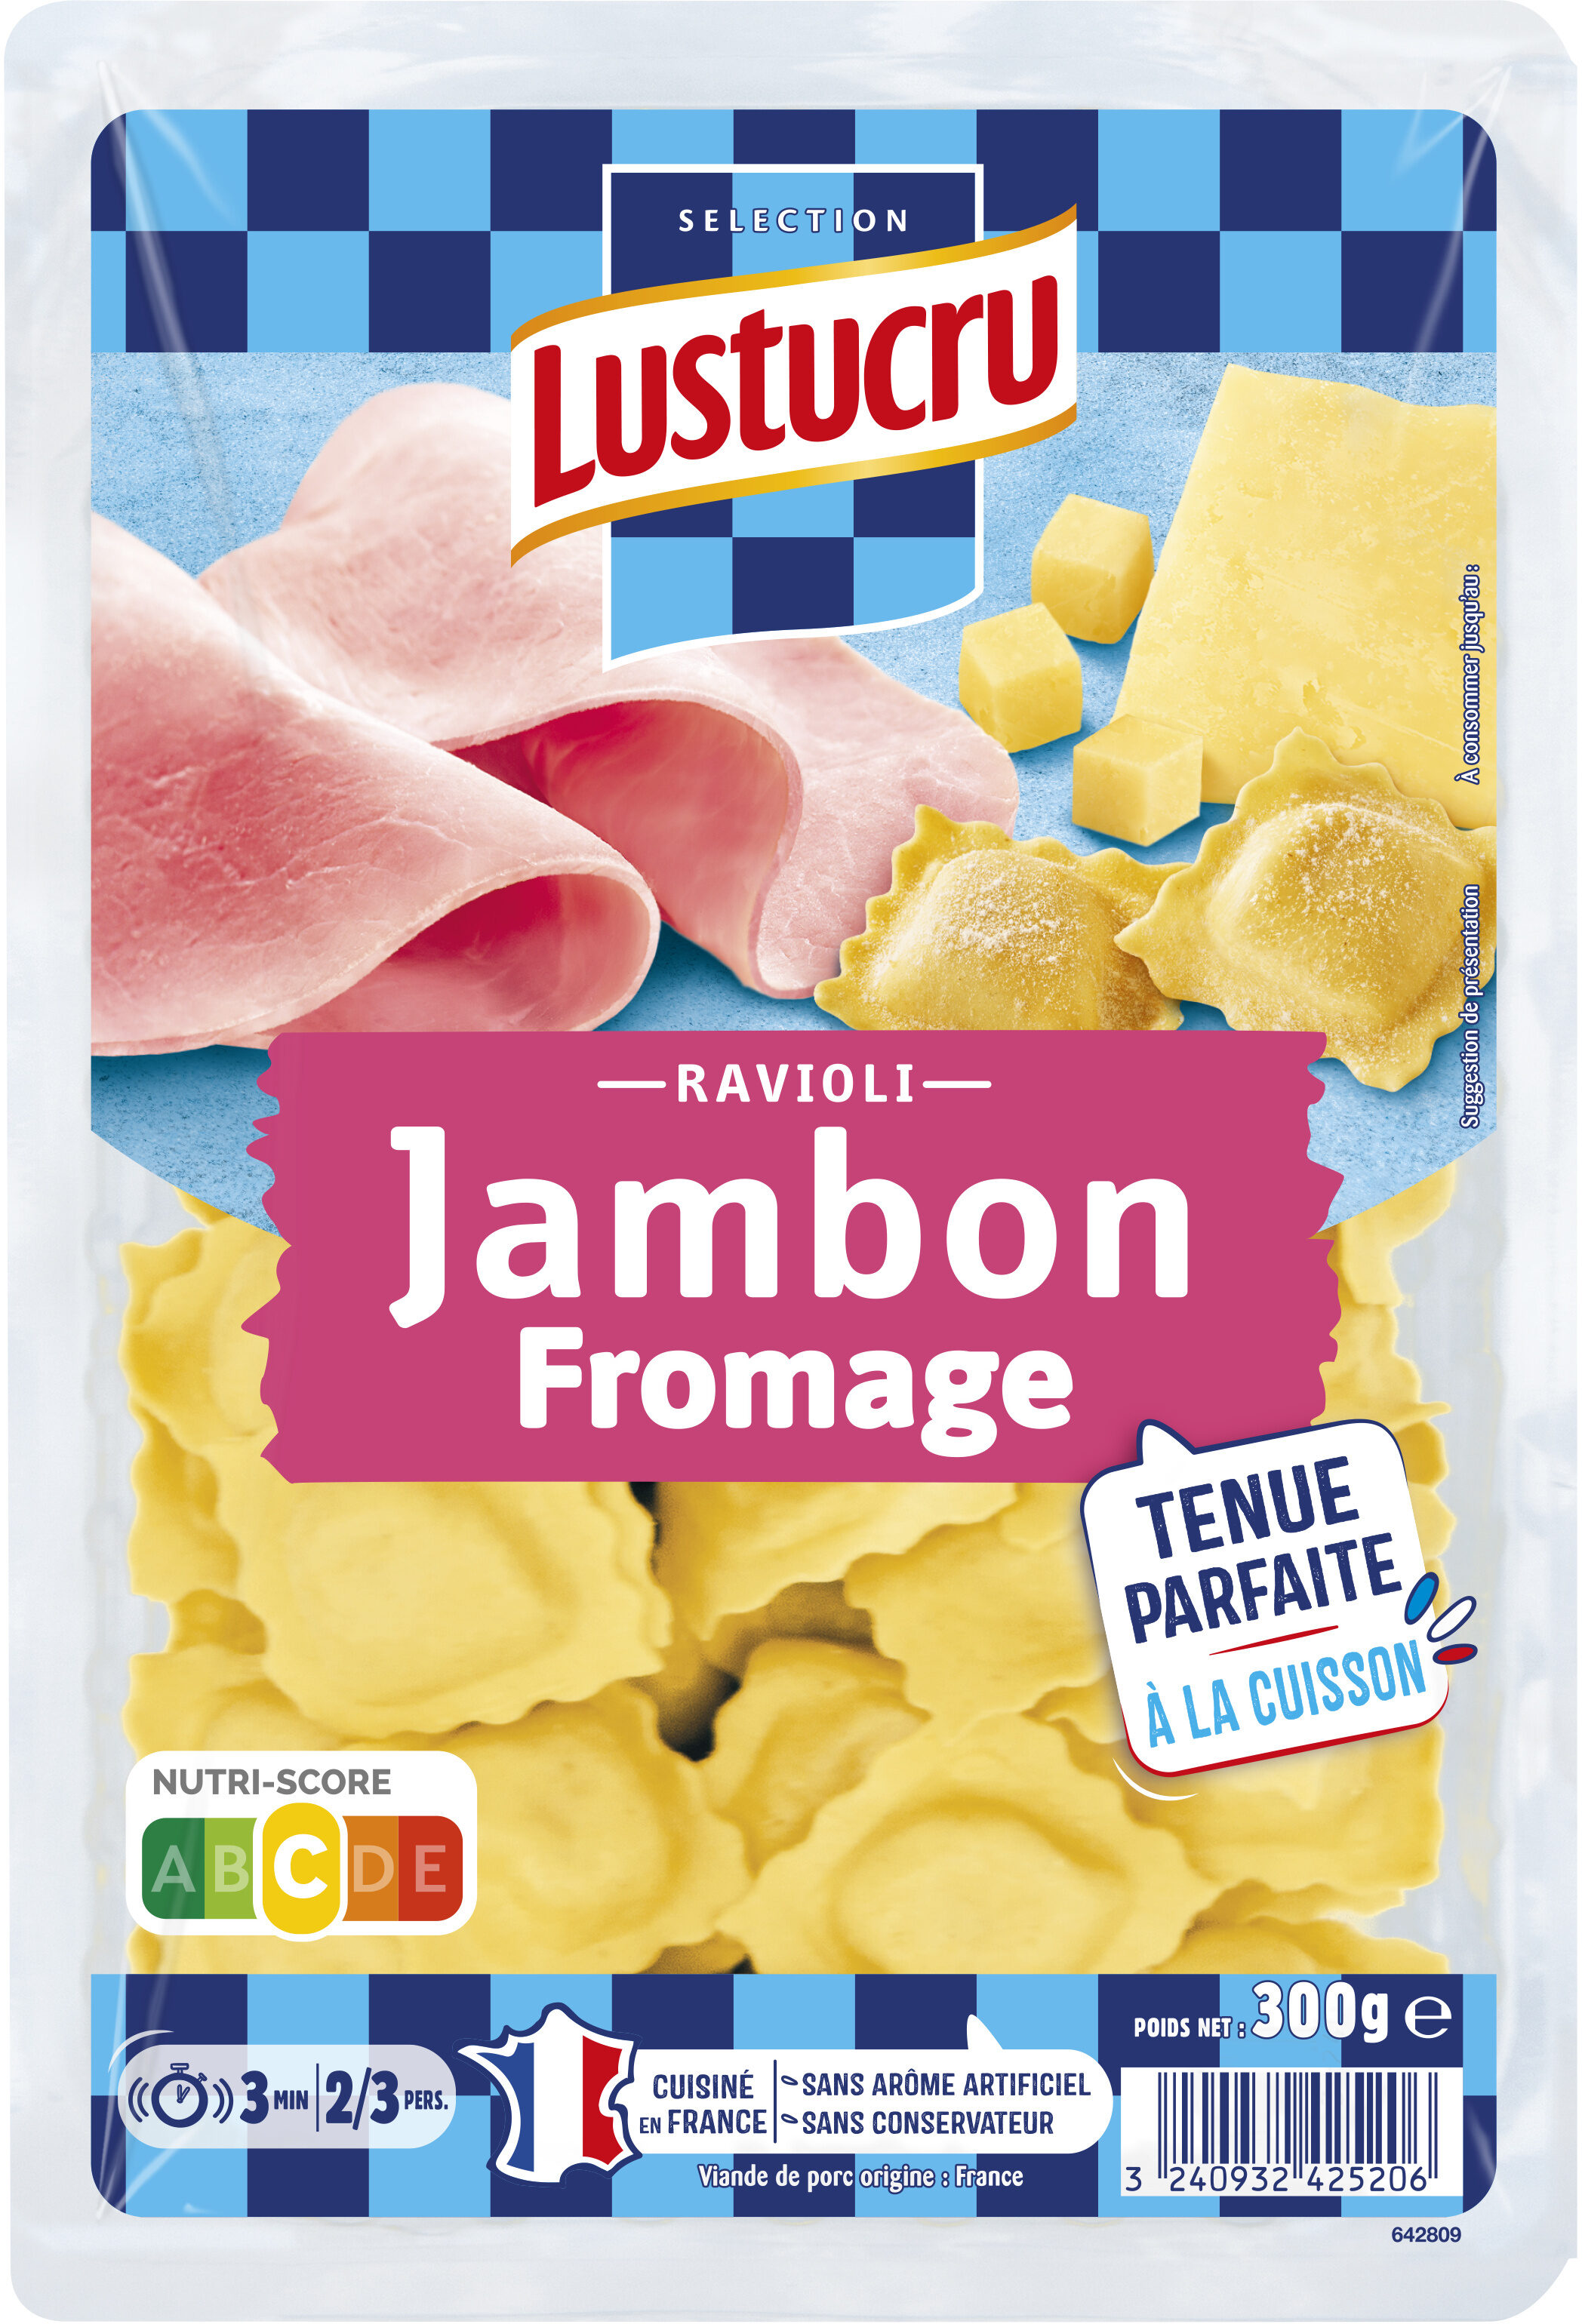 Lustucru ravioli jambon fromage 300g - Produkt - fr